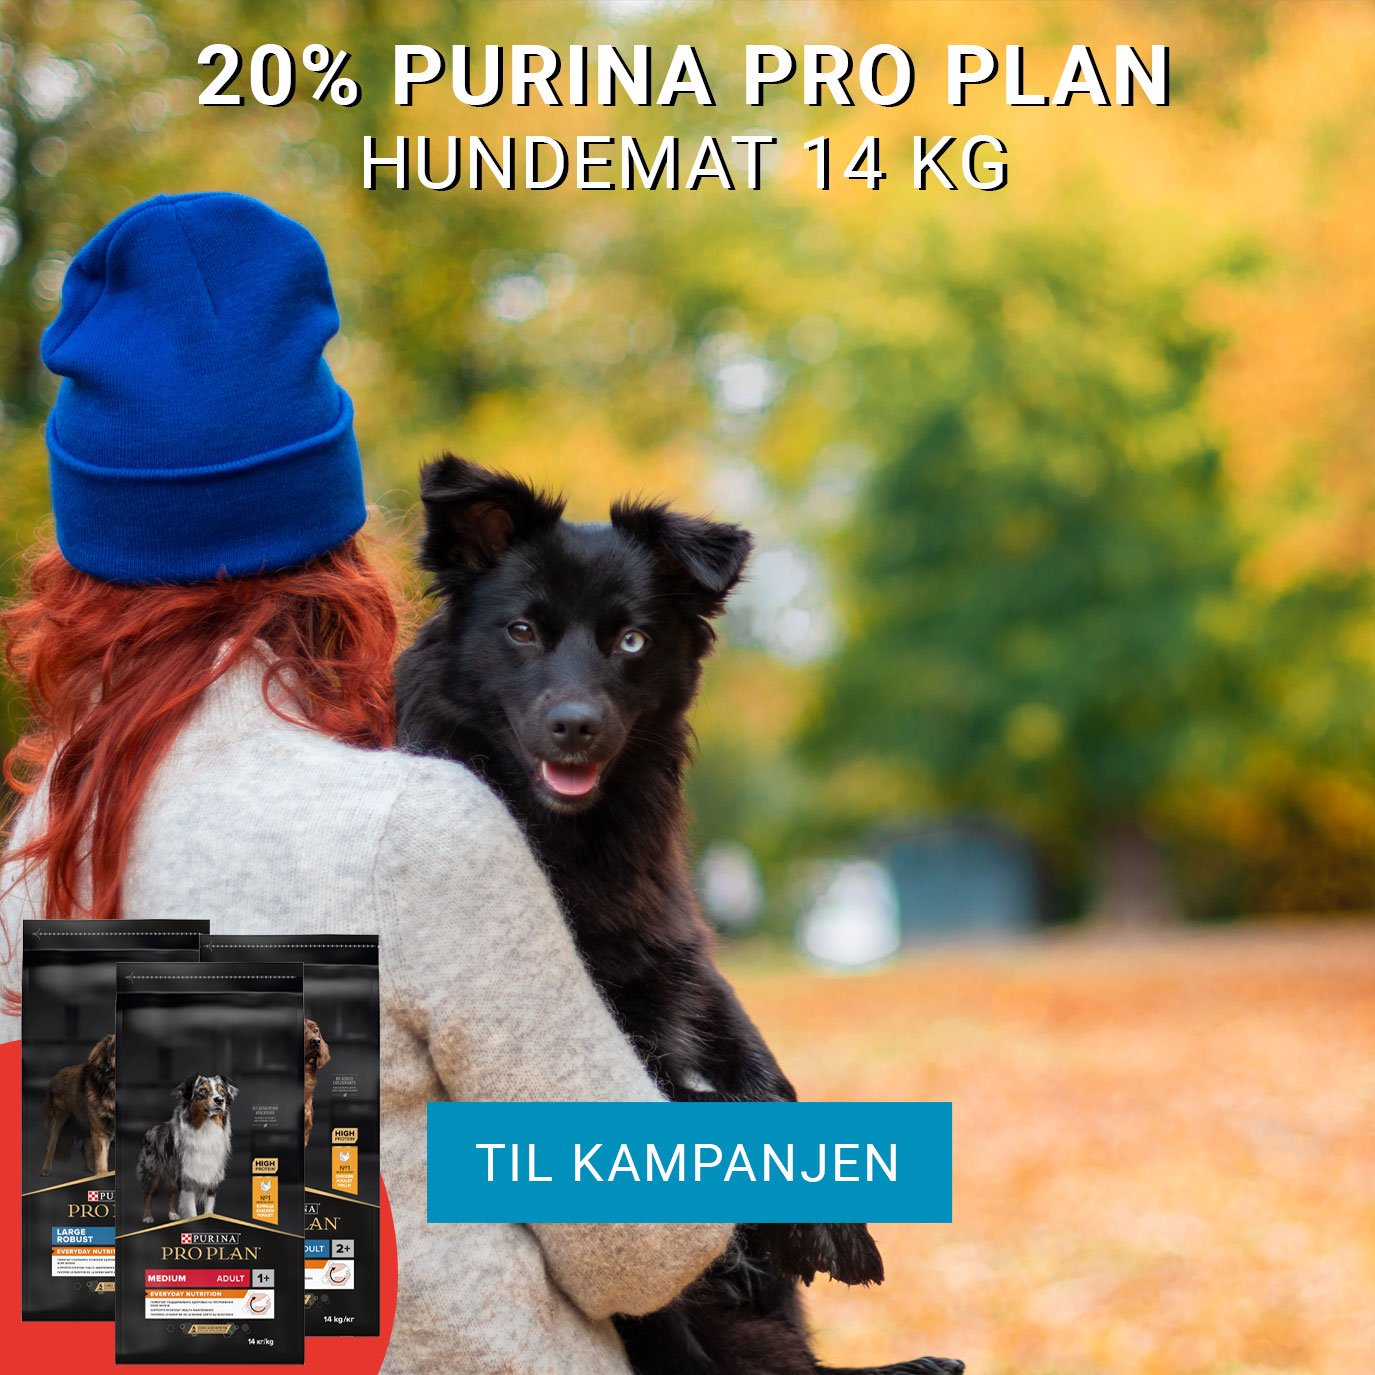 Purina Pro Plan Hundemat Kampanje